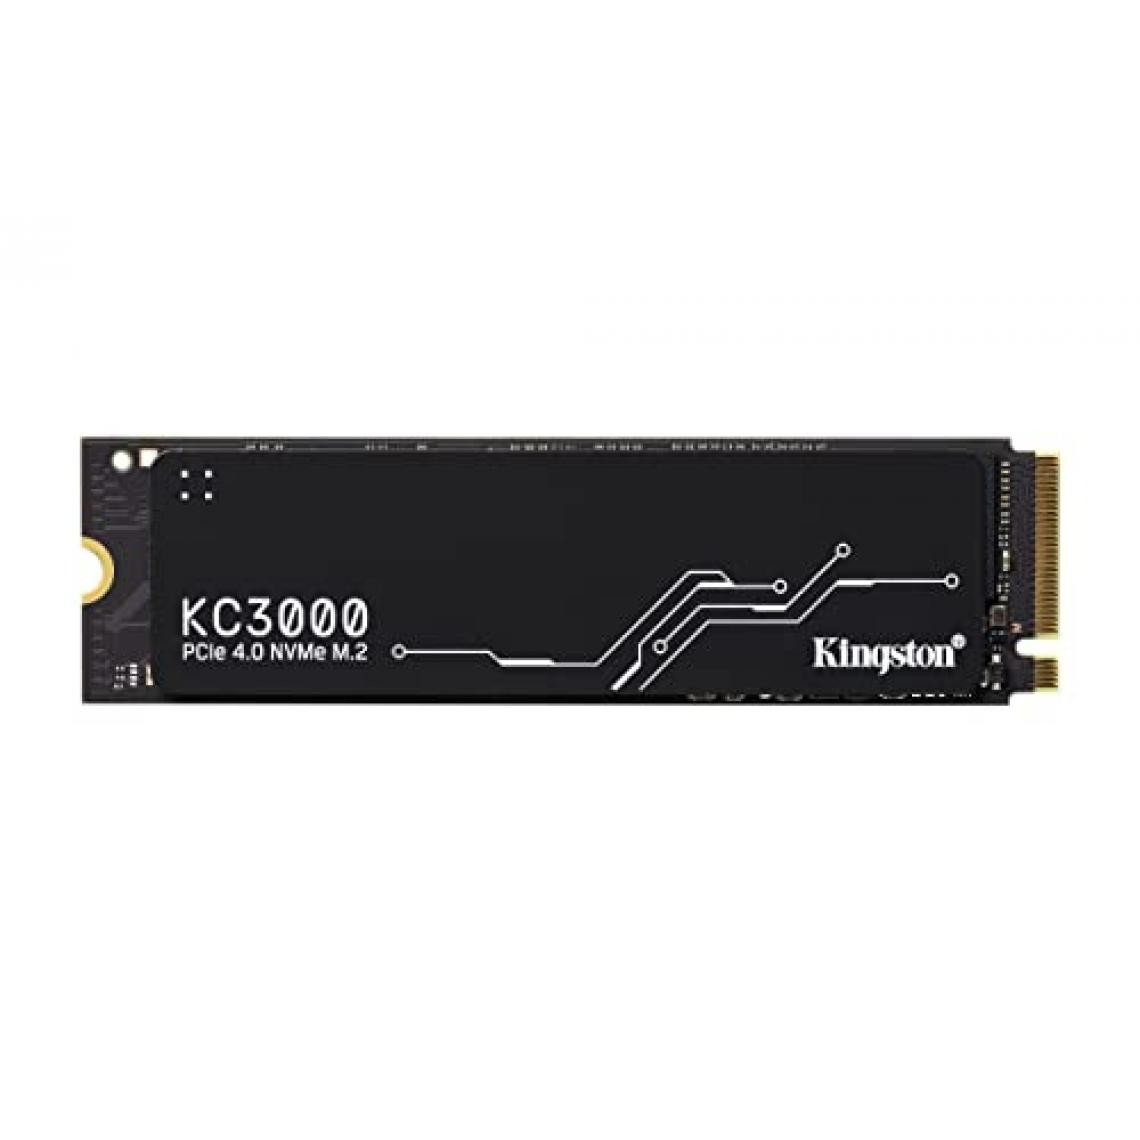 Kingston - KC3000 1024Go M.2 PCIe KC3000 1024Go PCIe 4.0 NVMe M.2 SSD - SSD Interne